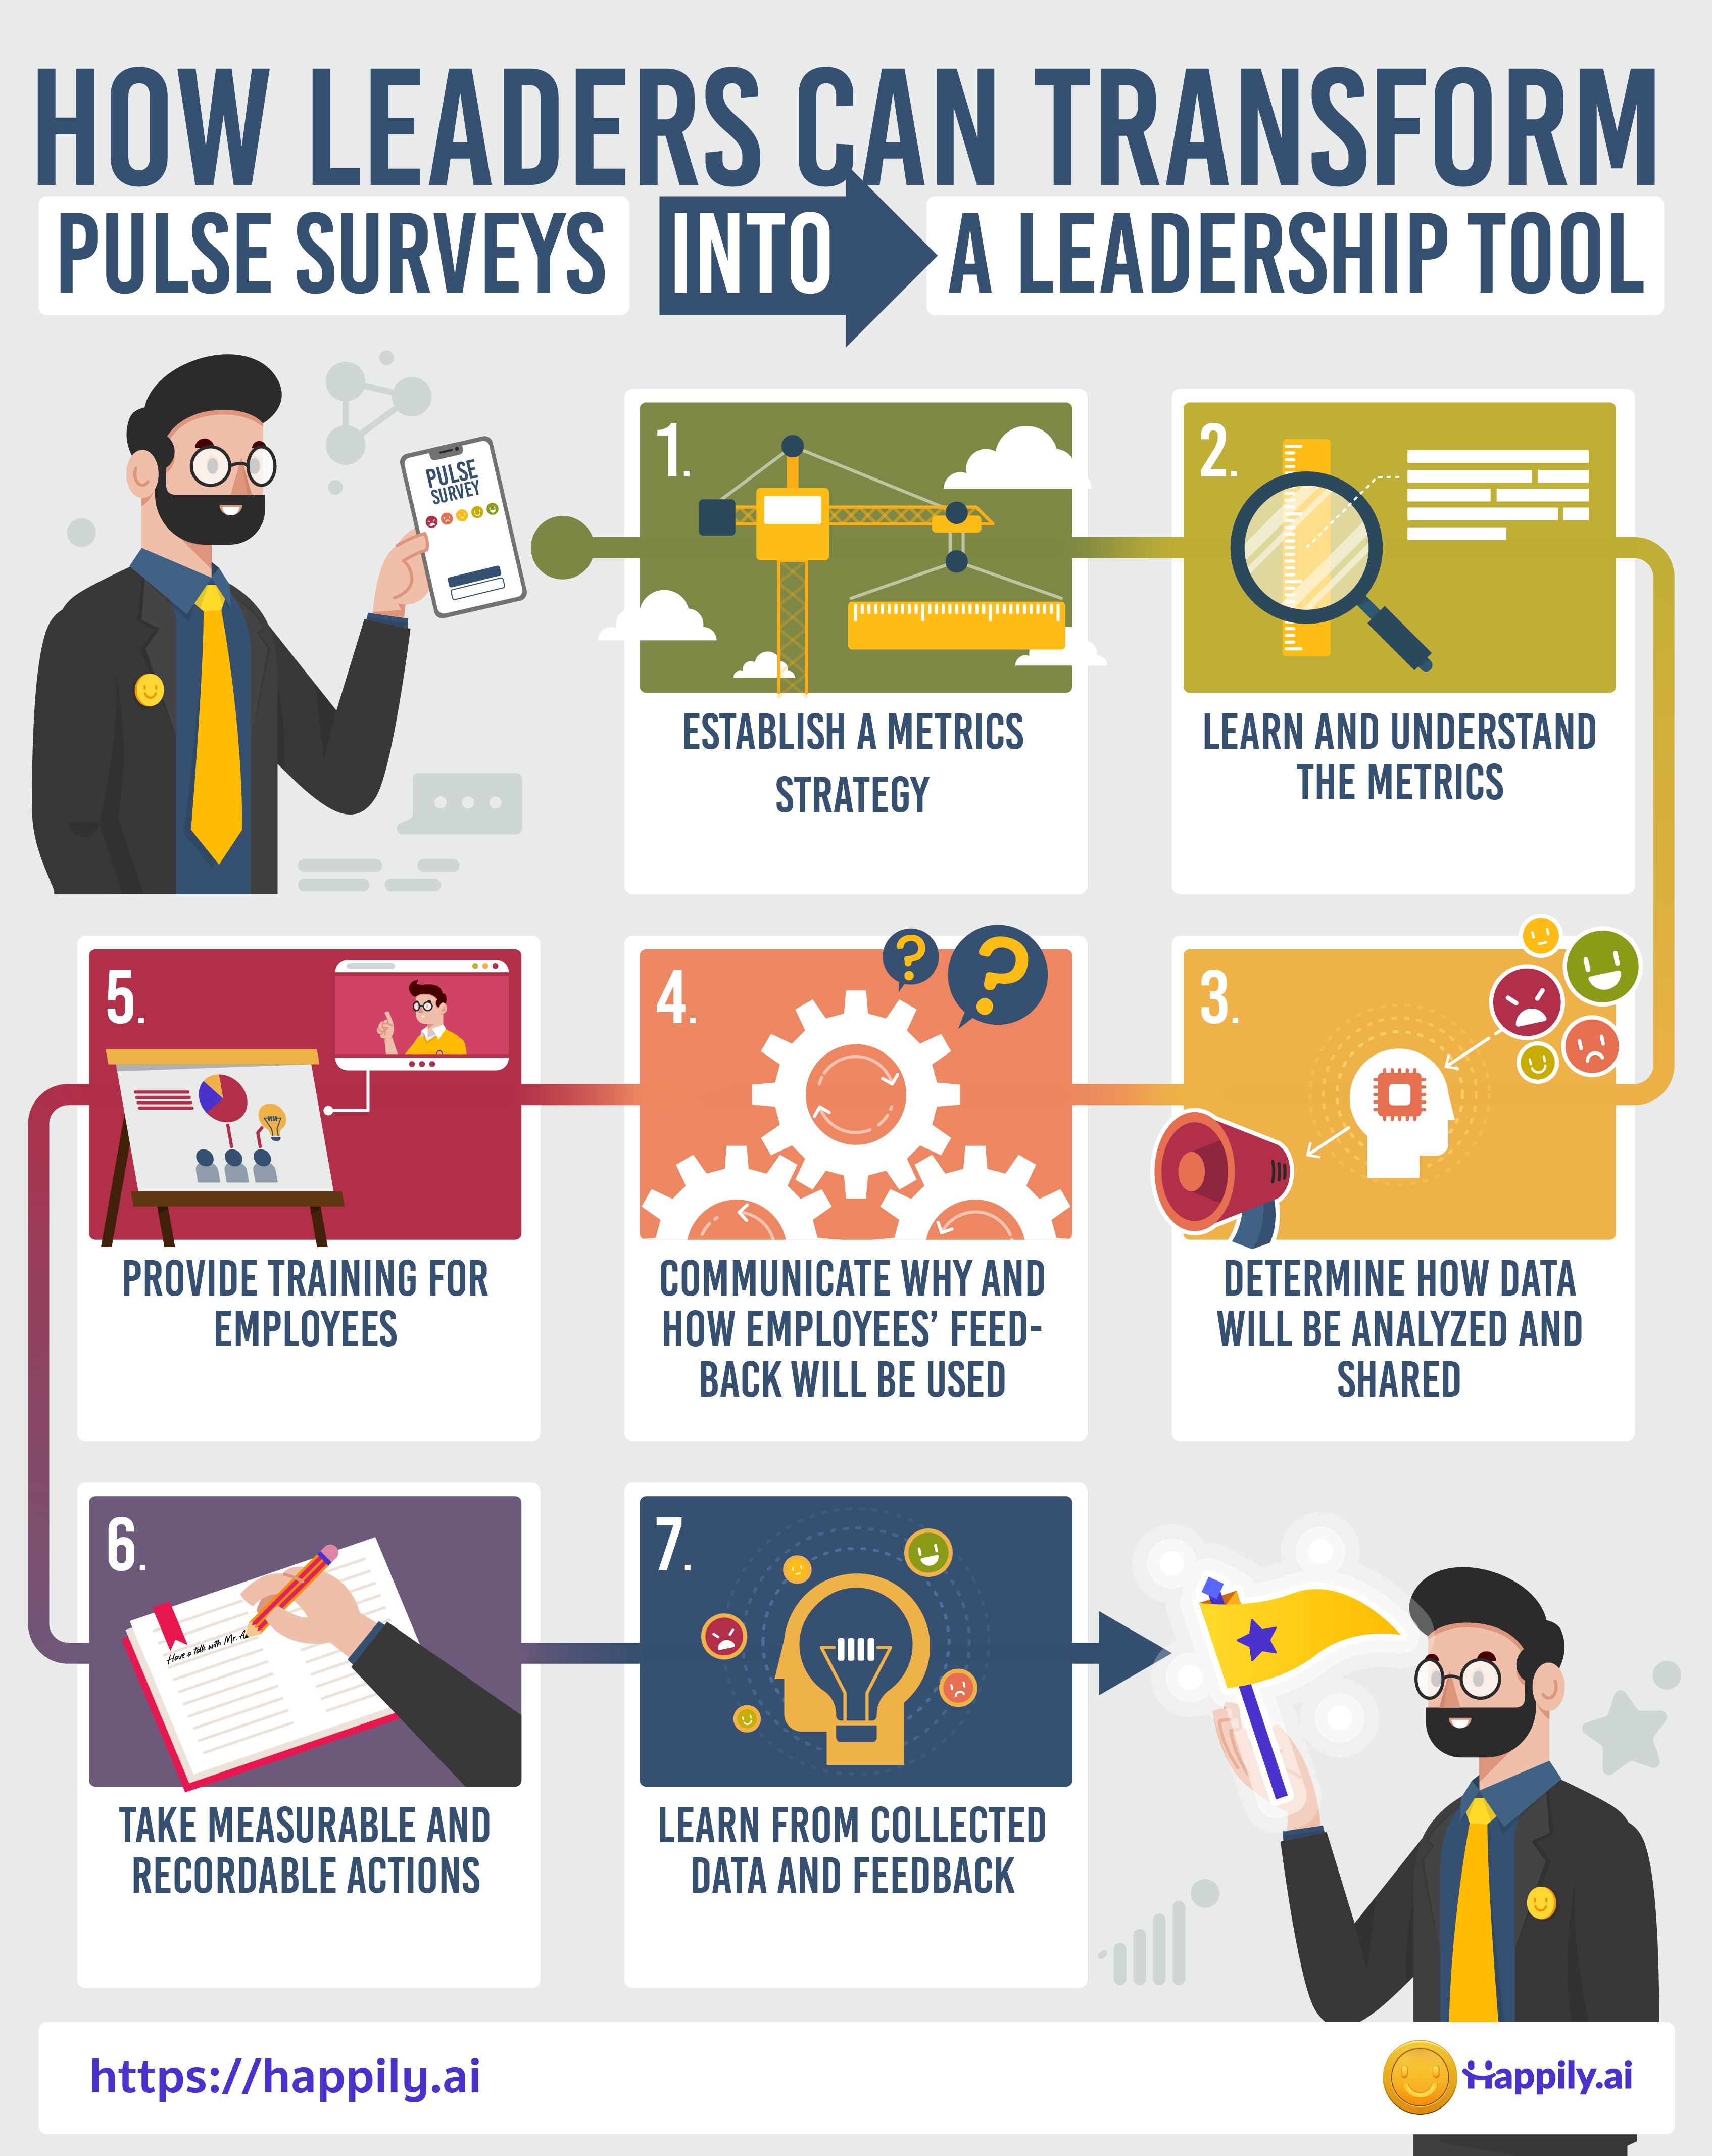 How Leaders can transform pulse surveys into a leadership tool